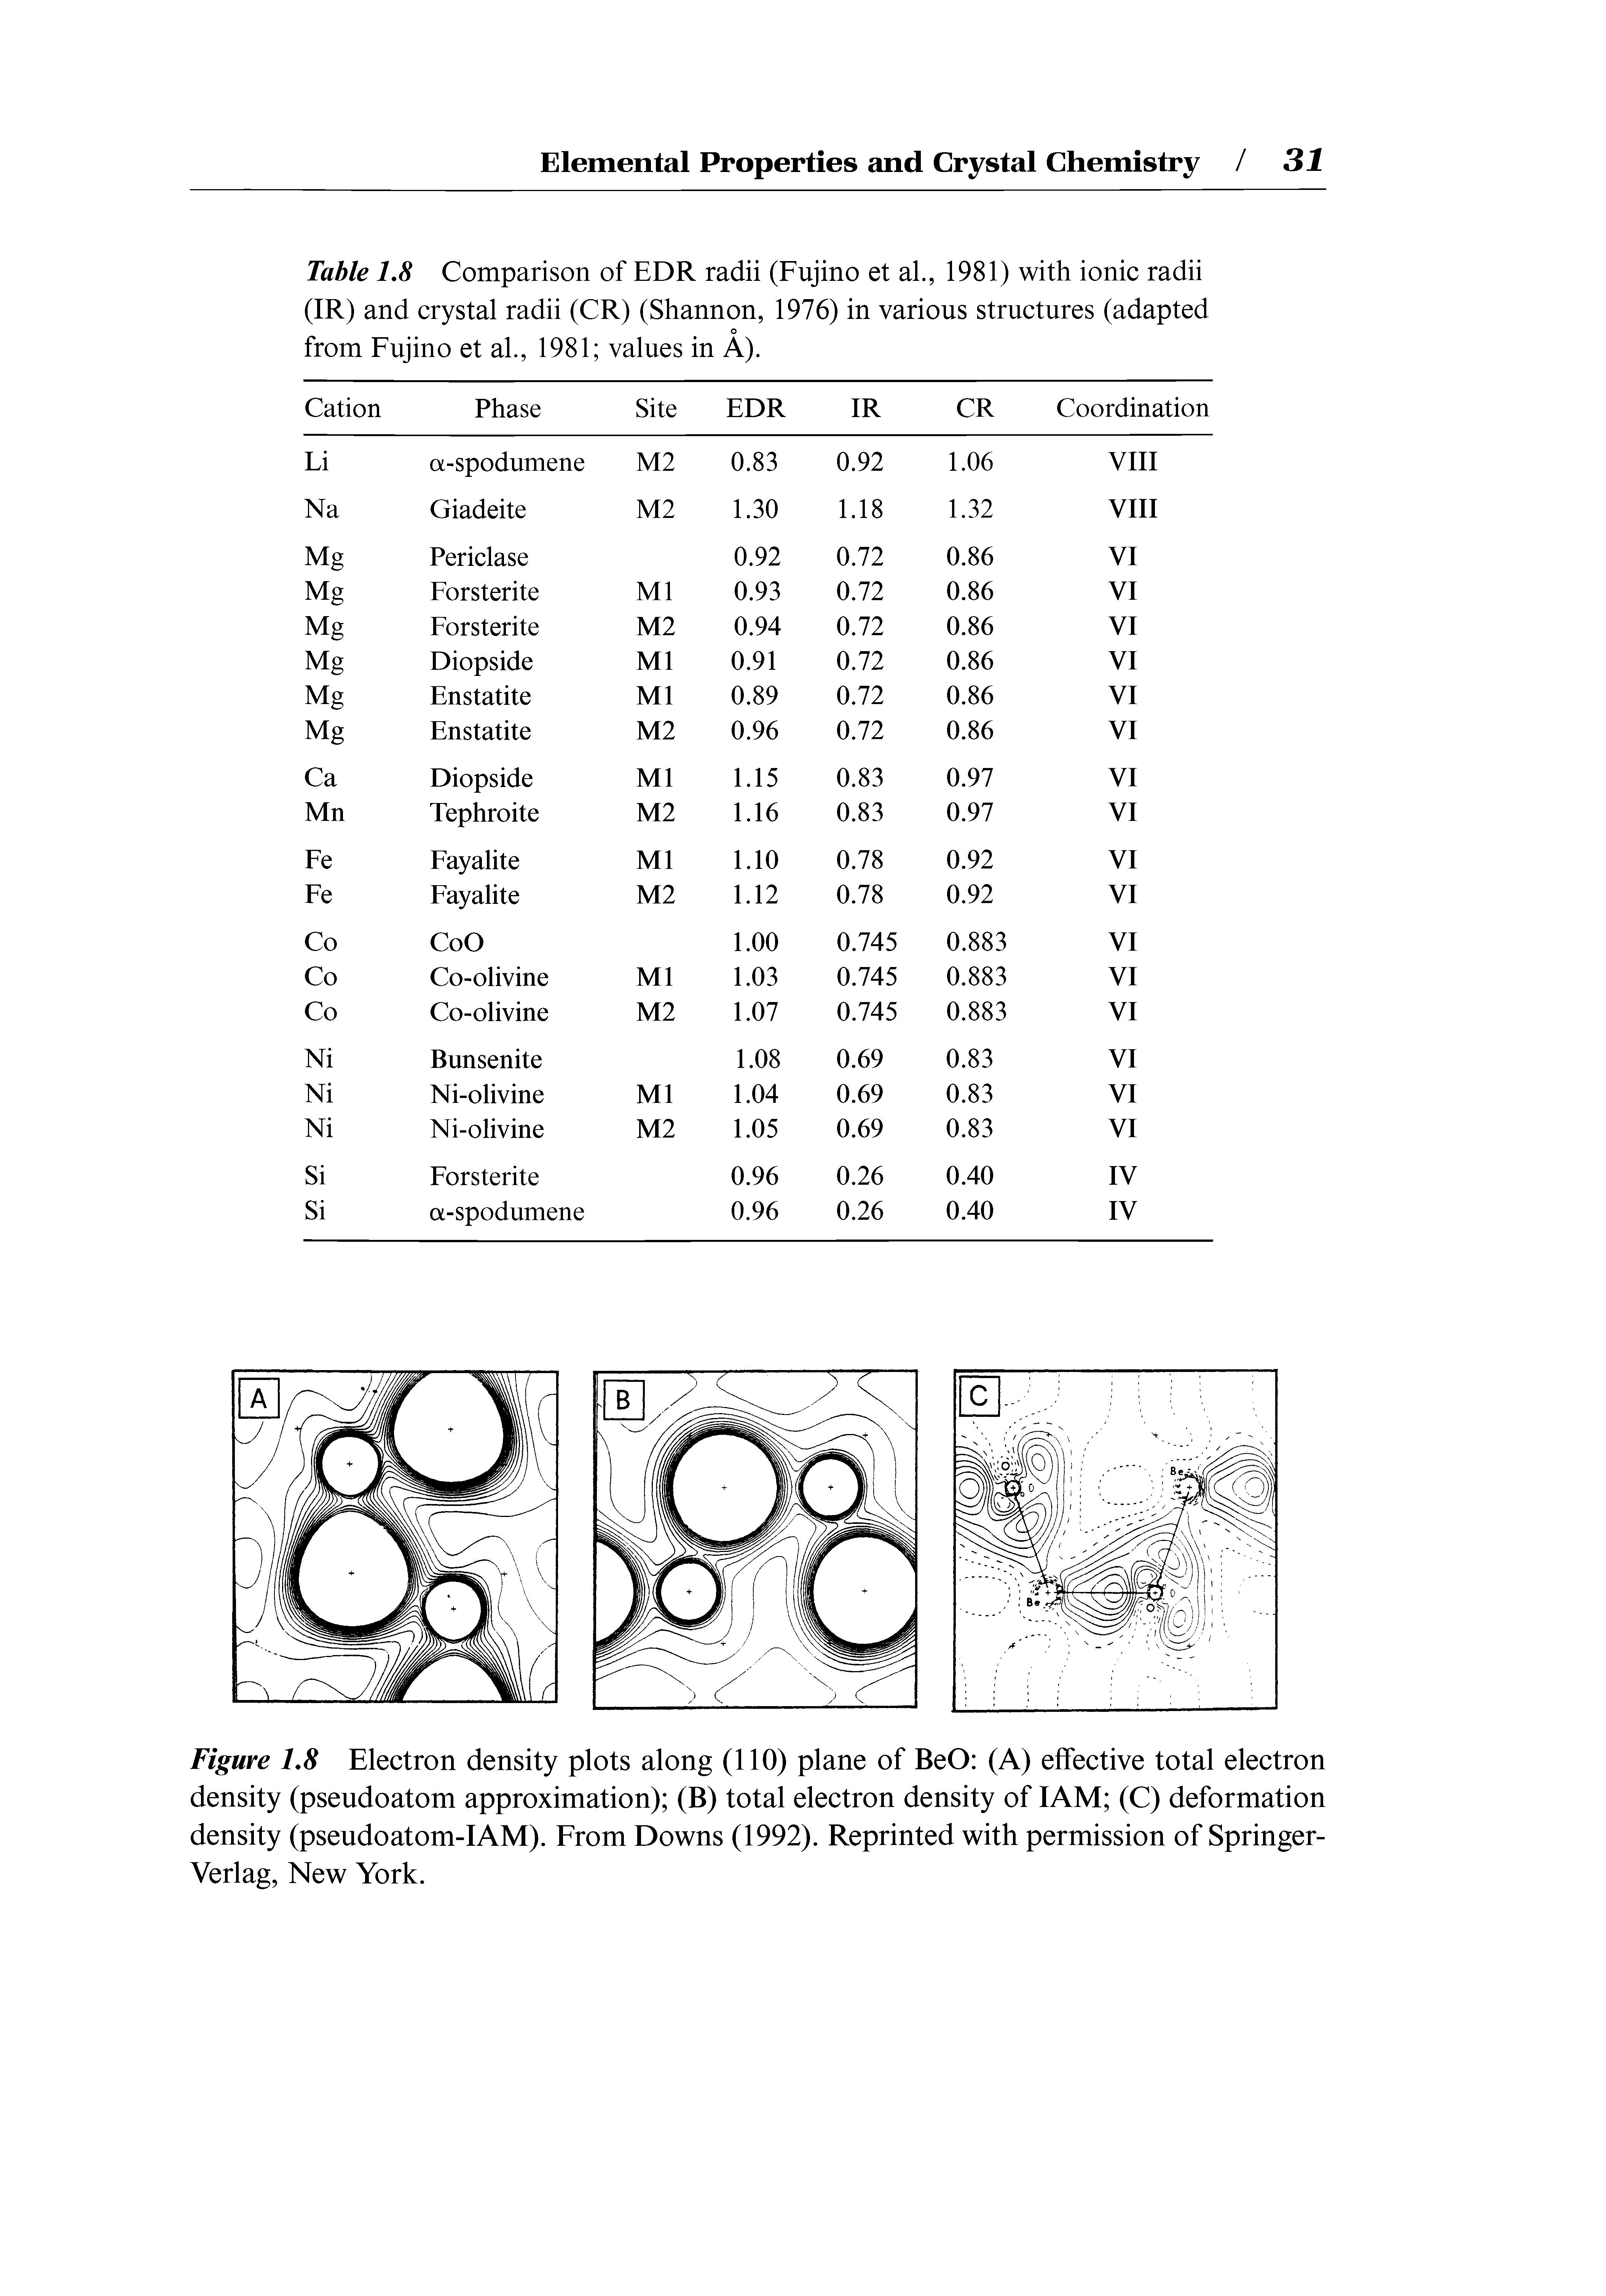 Figure 1,8 Electron density plots along (110) plane of BeO (A) effective total electron density (pseudoatom approximation) (B) total electron density of lAM (C) deformation density (pseudoatom-IAM). From Downs (1992). Reprinted with permission of Springer-Verlag, New York.